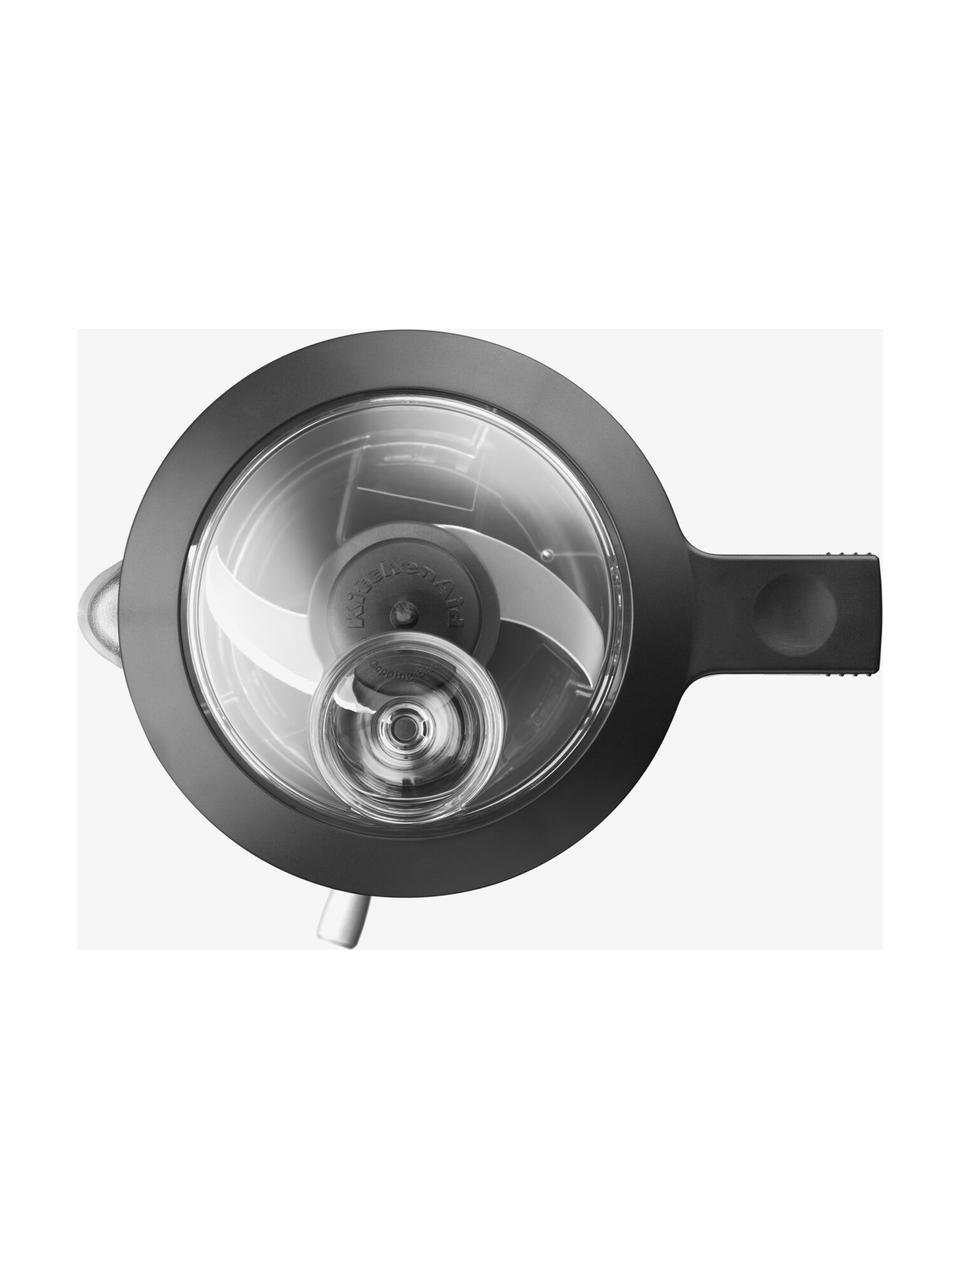 Food Processor KitchenAid Mini, Gehäuse: Kunststoff, Weiß, glänzend, B 18 x H 22 cm